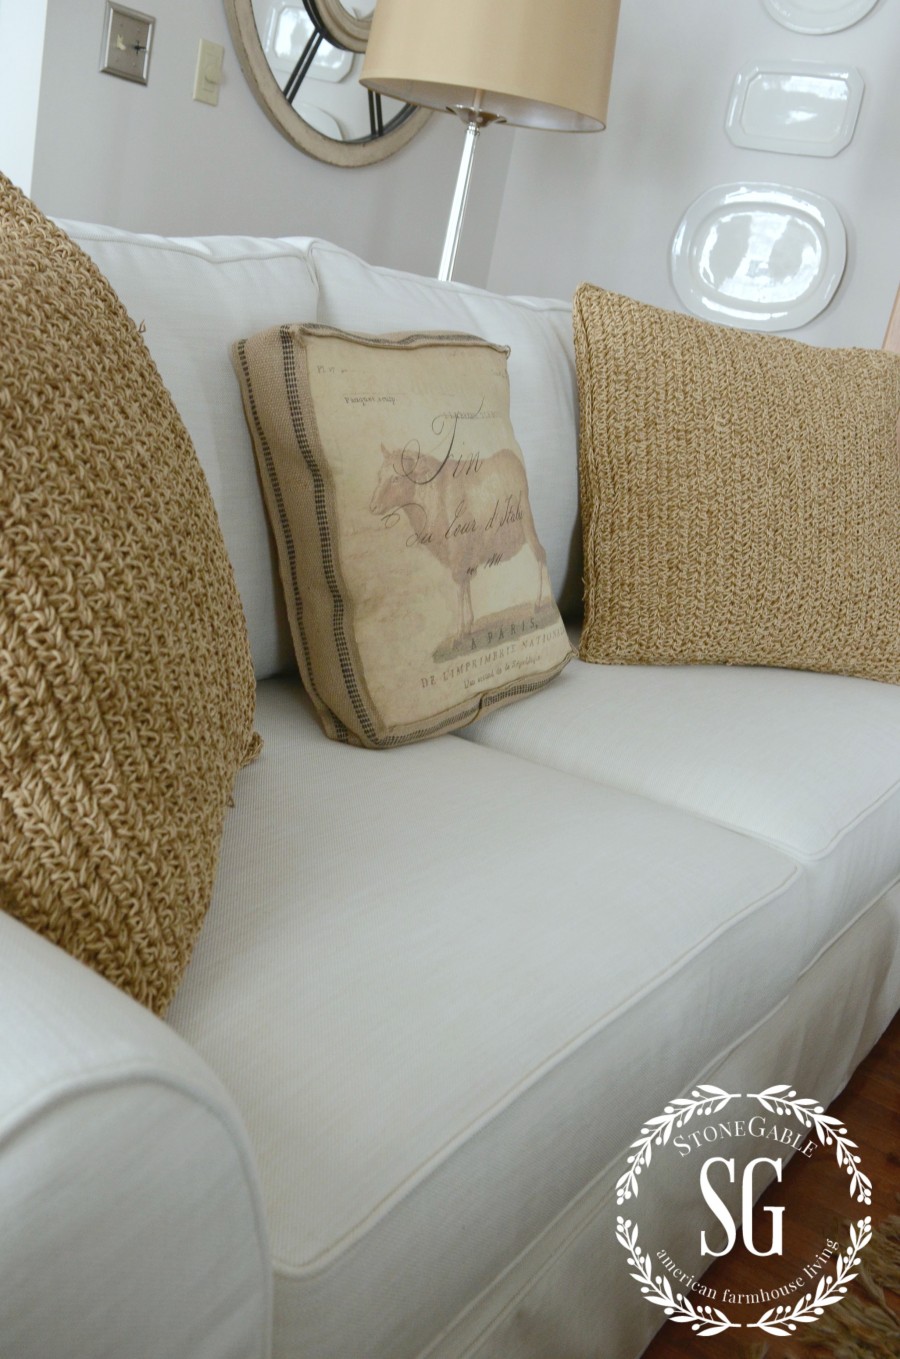 POTTERY BARN SOFA-sofa seat and cushions-stonegableblog.com